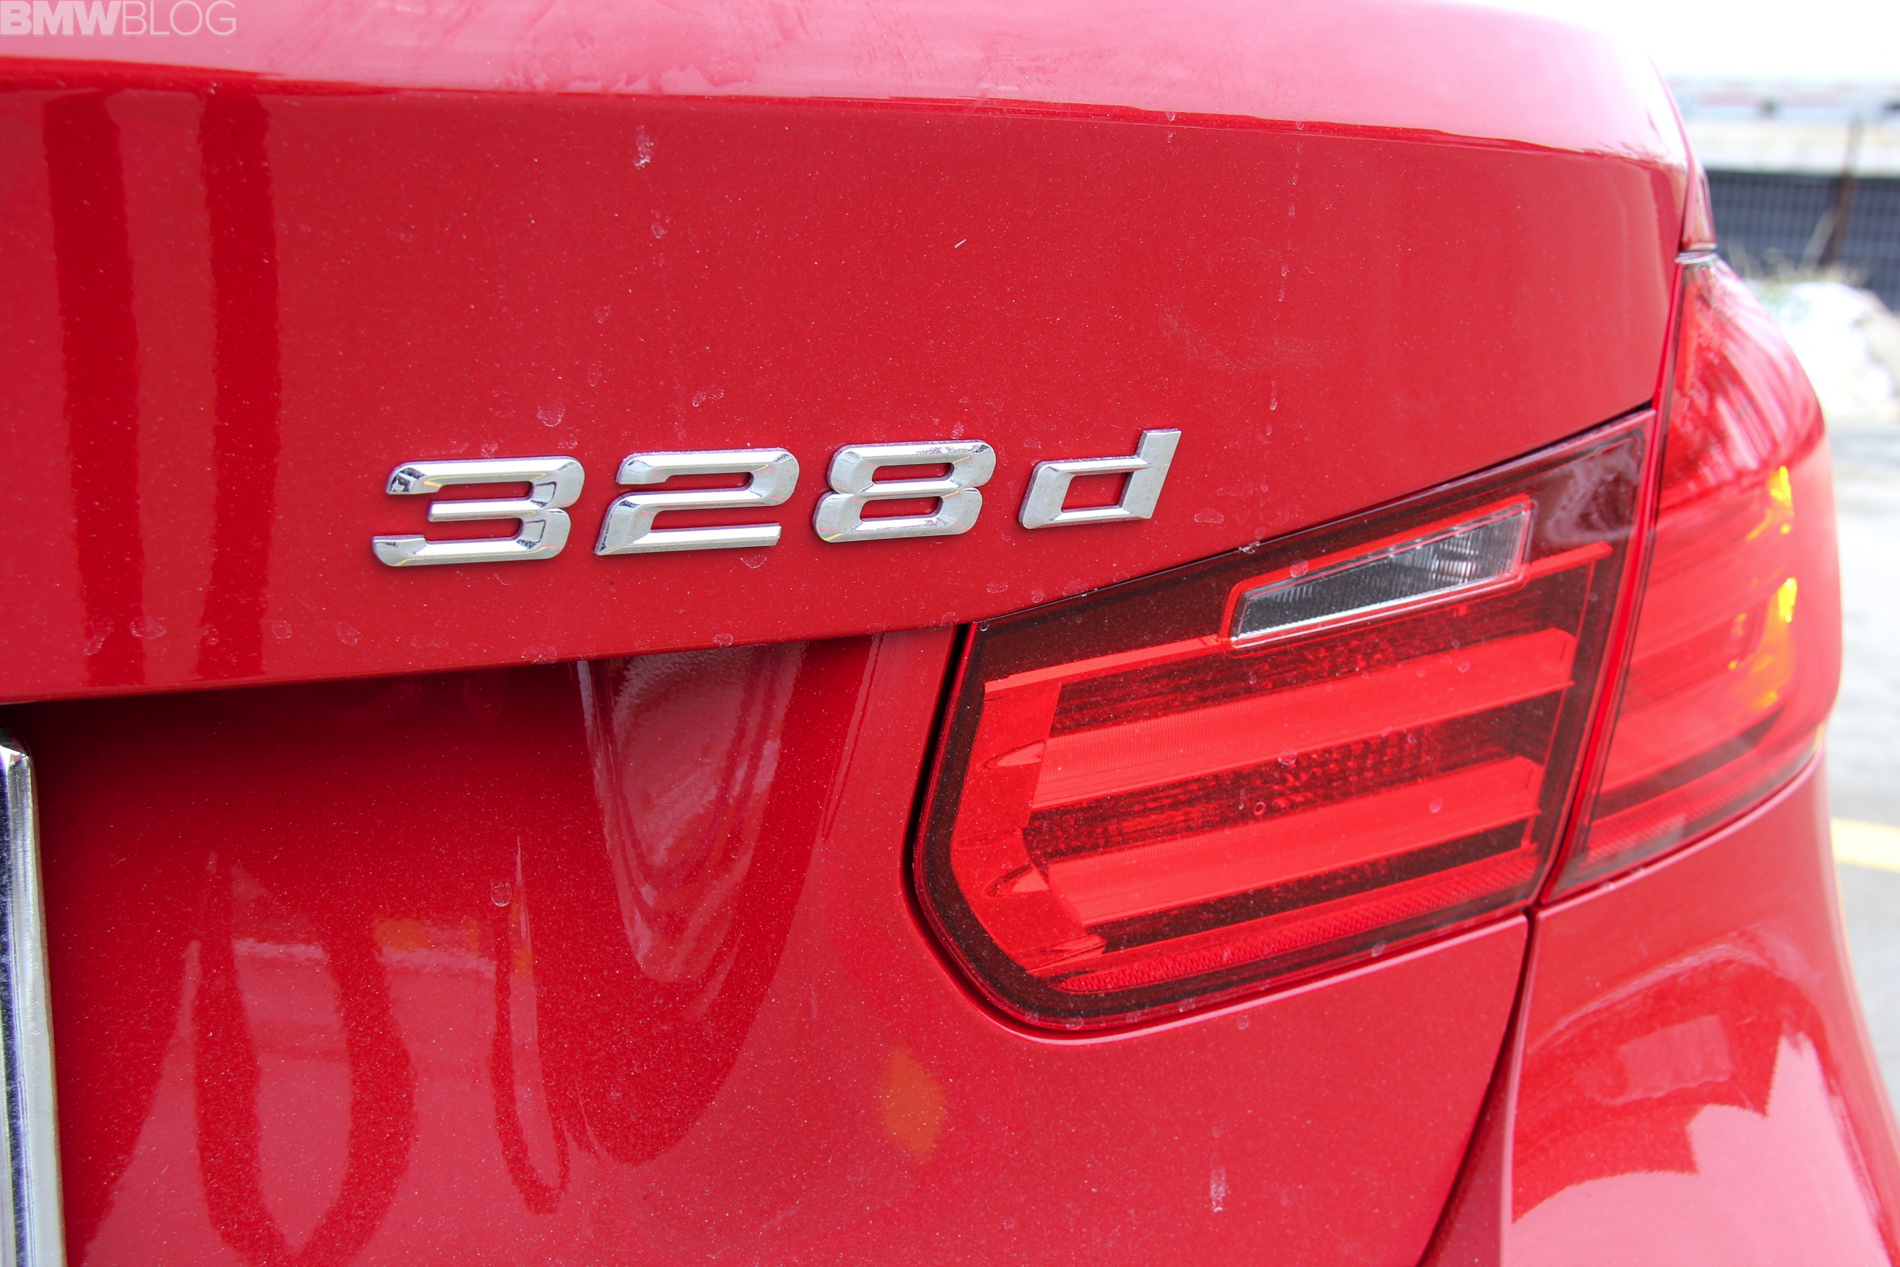 2014 BMW 328d test drive review 05